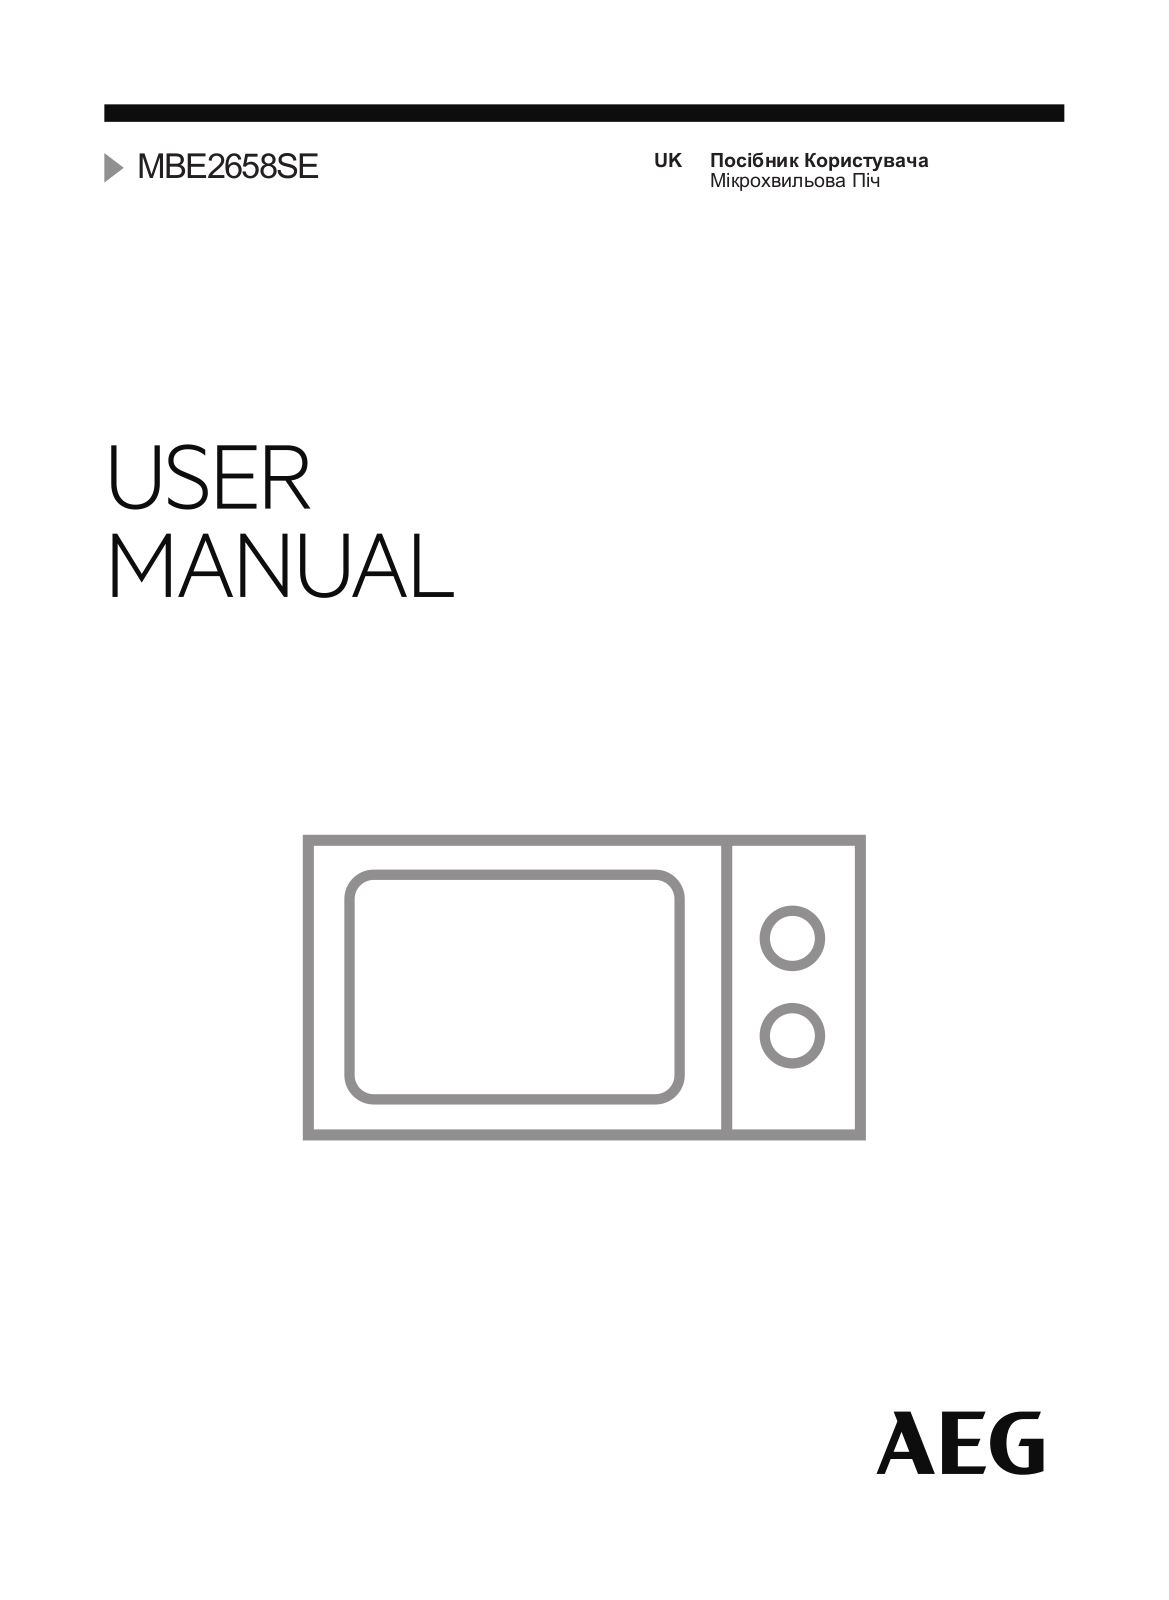 AEG MBE2658SE User Manual